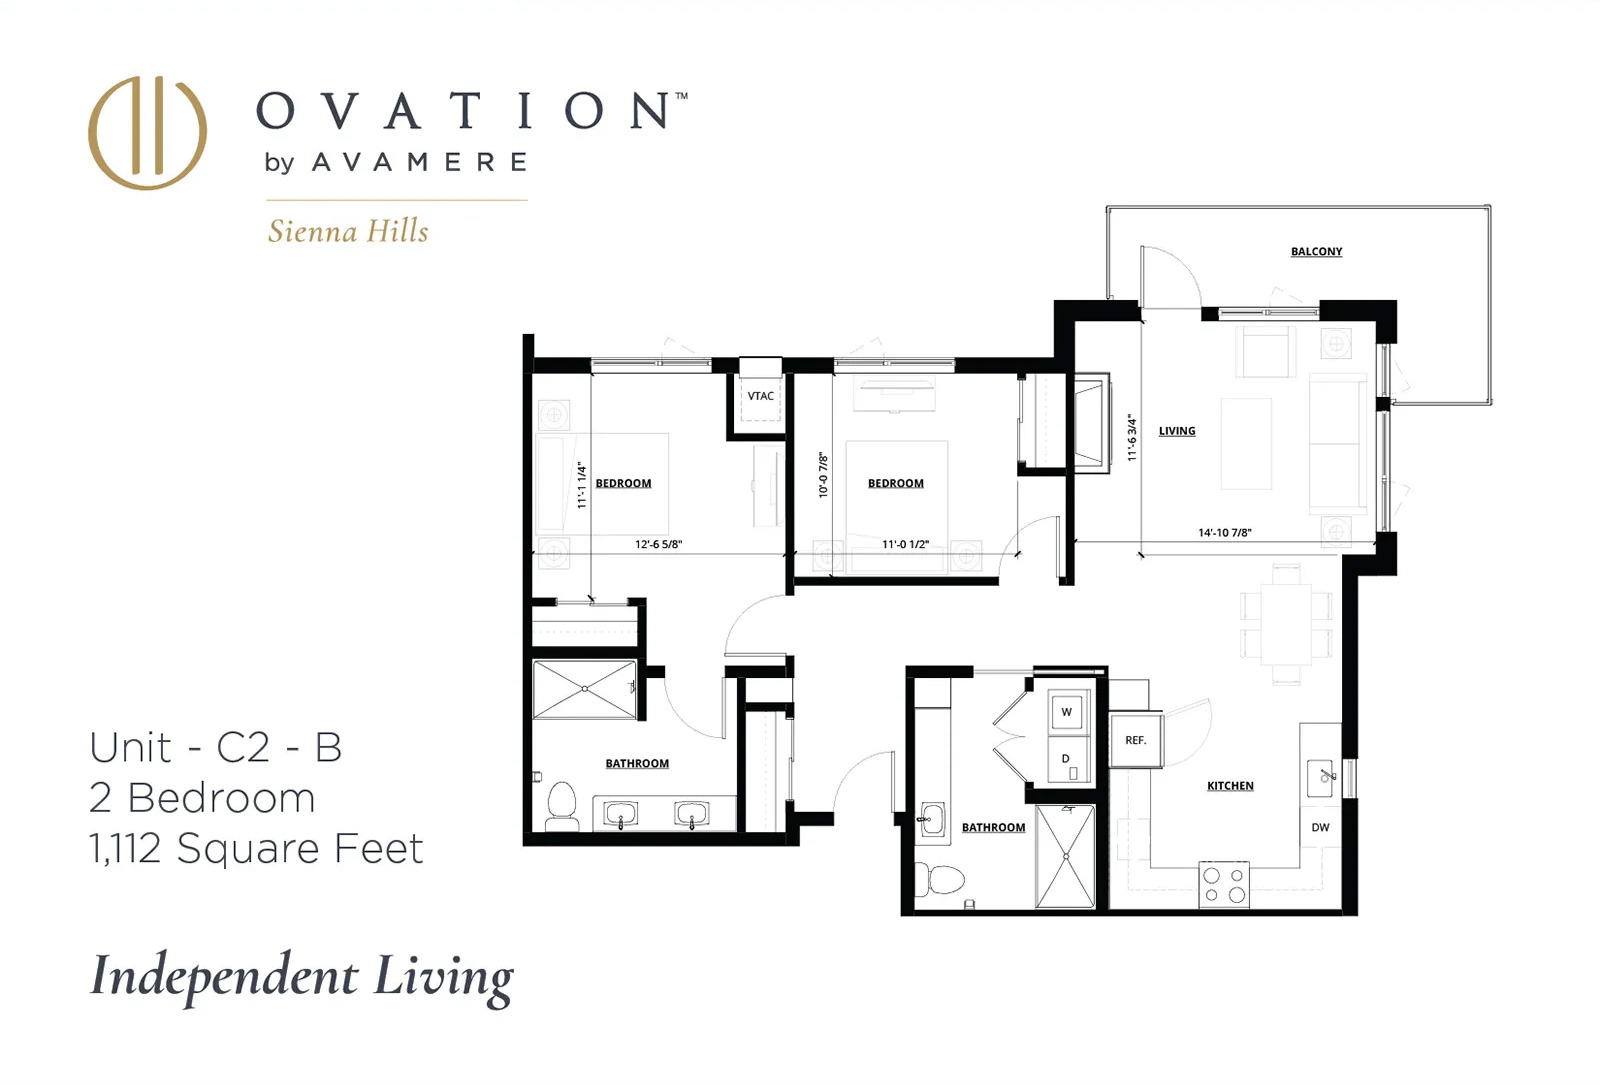 Ovation Sienna Hills Independent Living Floorplan 2 Bedroom 1112 sq ft